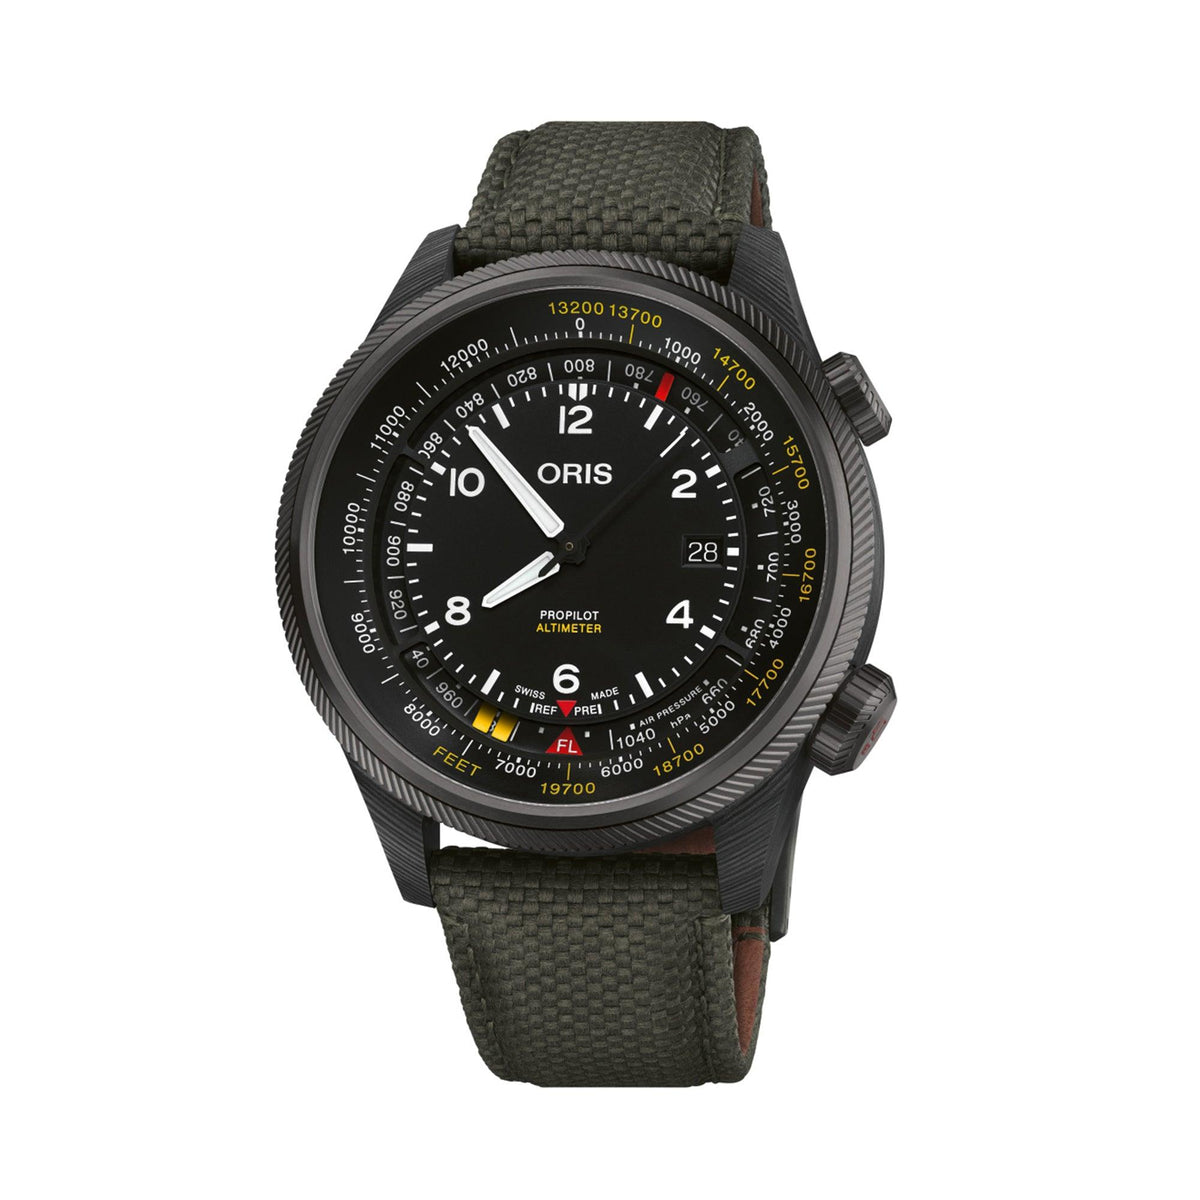 Oris Propilot Altimeter 47mm Automatic Watch 793 7775 8734TS - Wallace Bishop